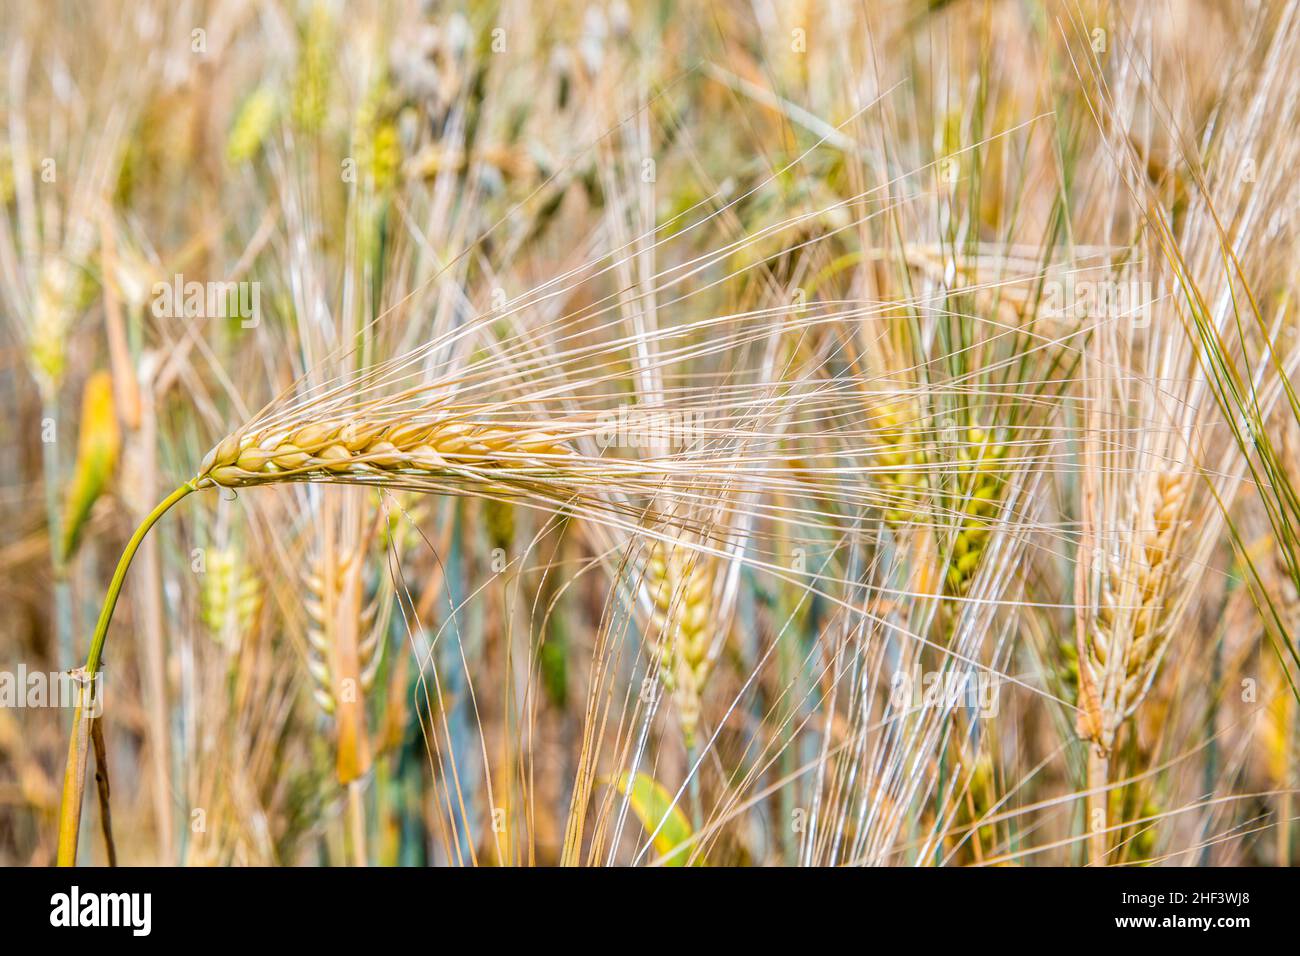 Barley ears gives a harmonic pattern - Hordeum vulgare Stock Photo